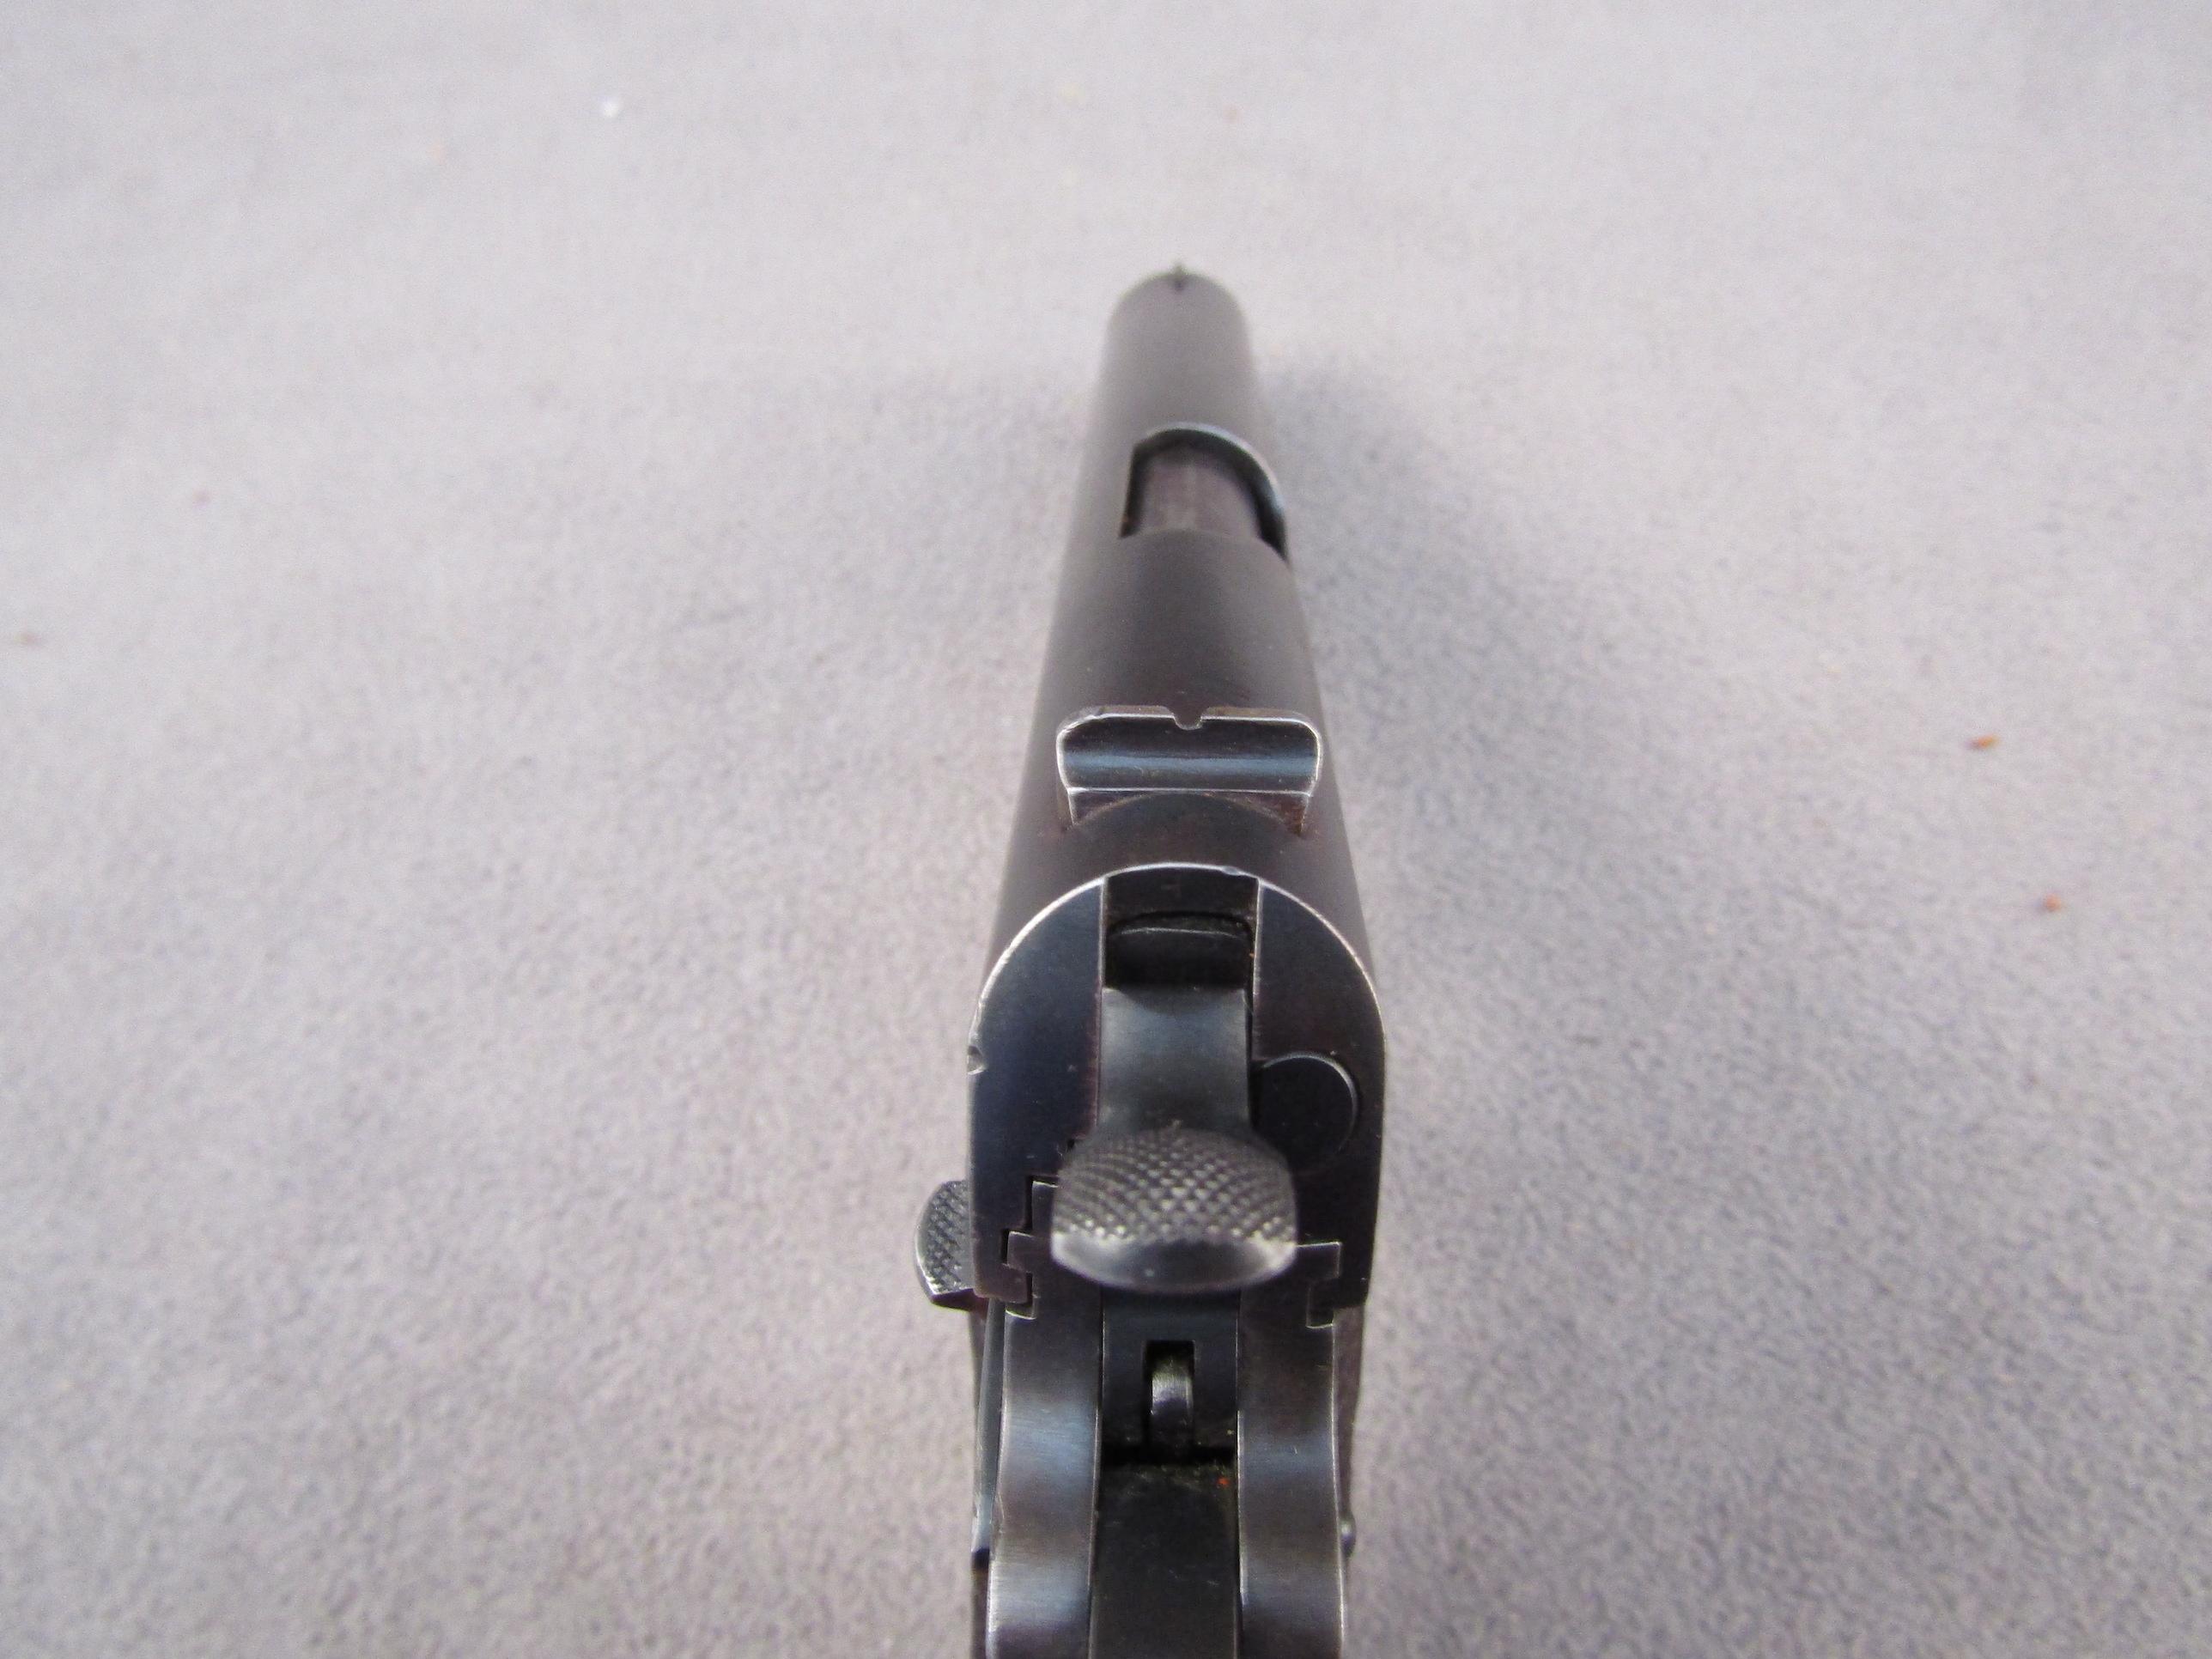 handgun: COLT Model 1911, Semi-Auto Pistol, .45, 7 shot, 5" barrel, S#301938